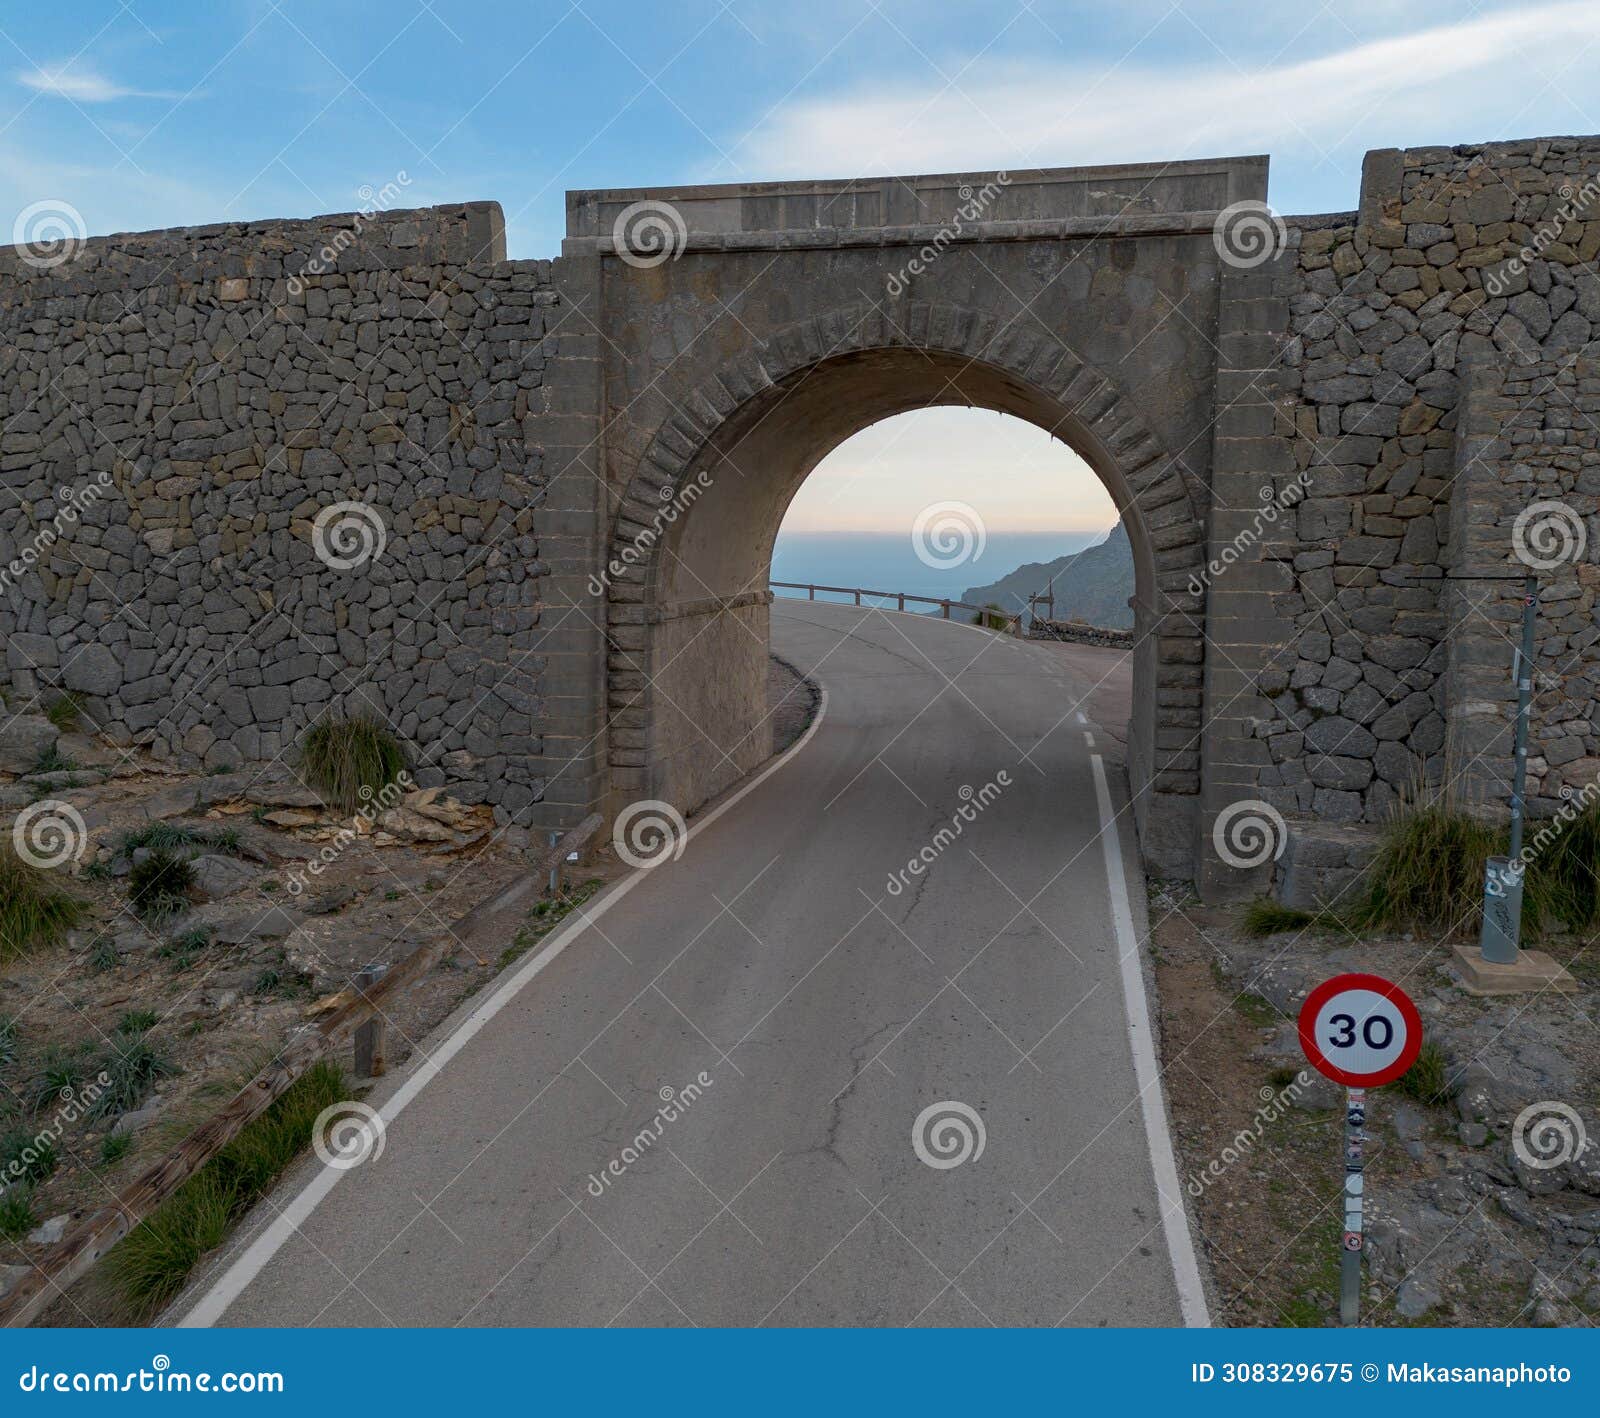 underpass of the famous nus de sa corbata hairpin turn on the serra de tramuntana highway in the mountains of northern mallorca